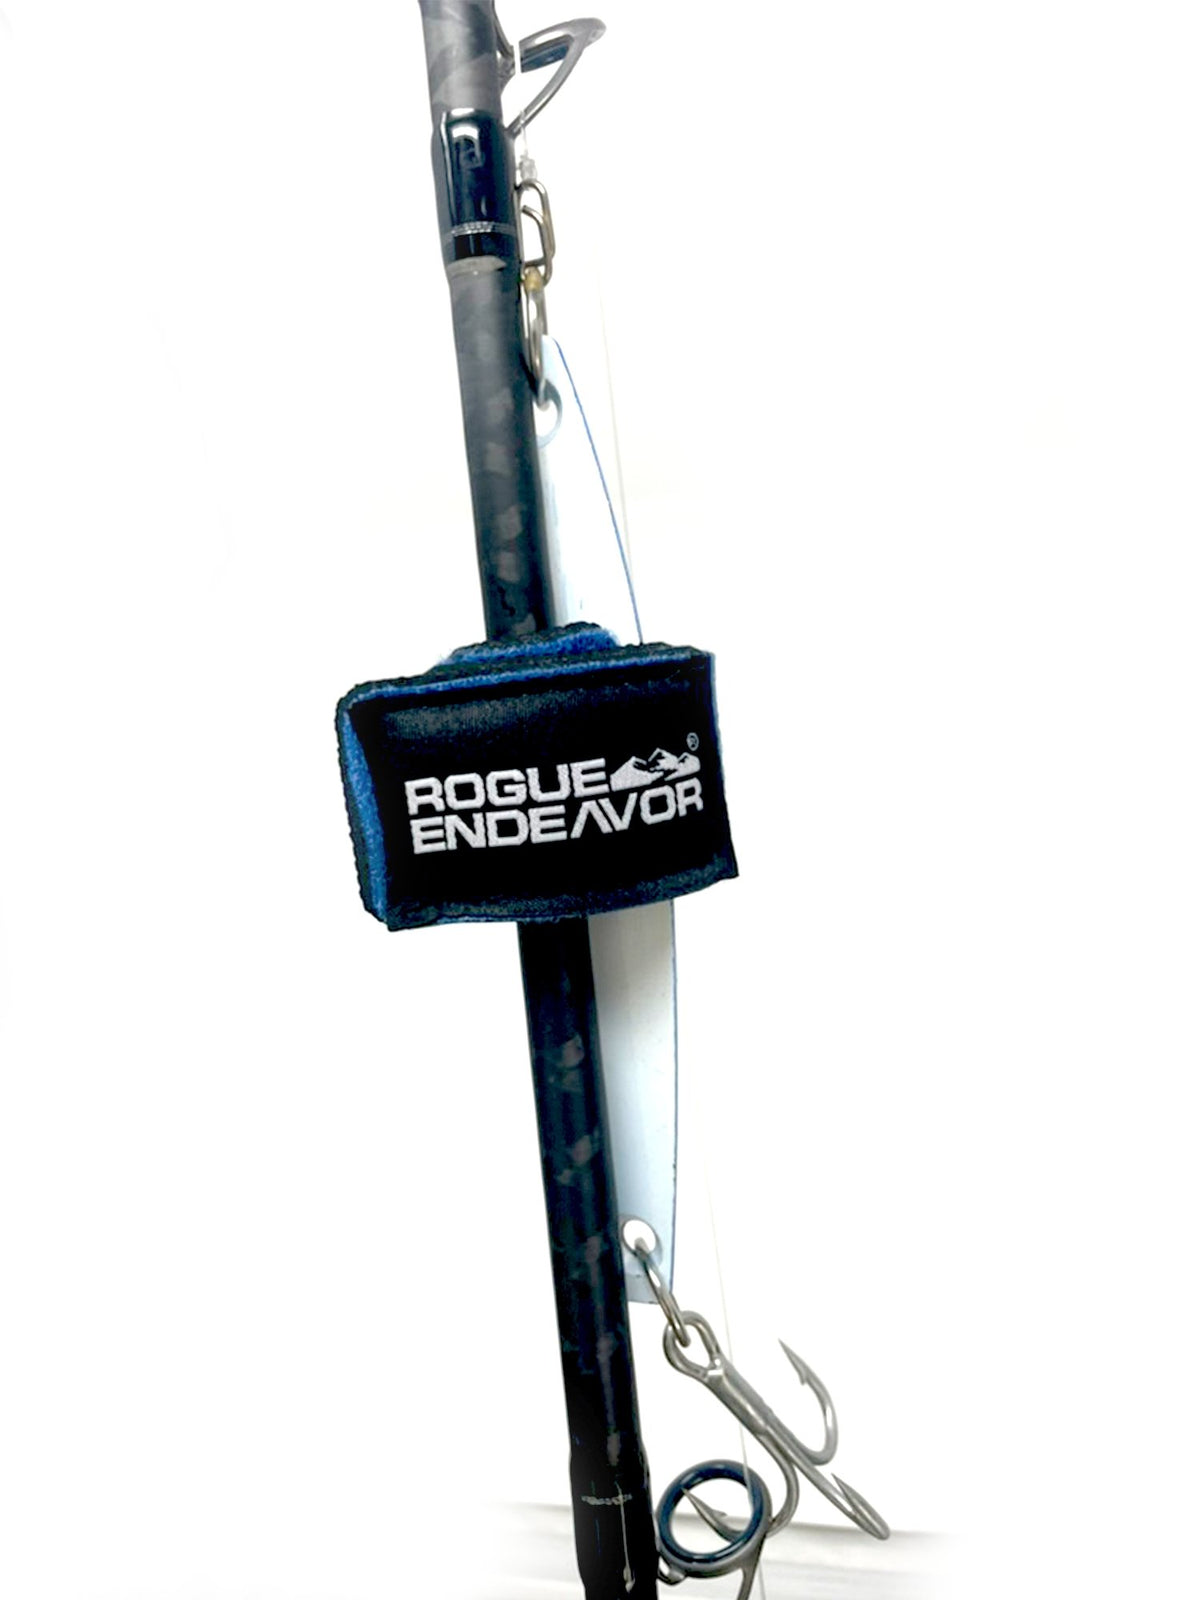 Fishing Rod & Paddle Leash (2 Pack) – RogueEndeavor